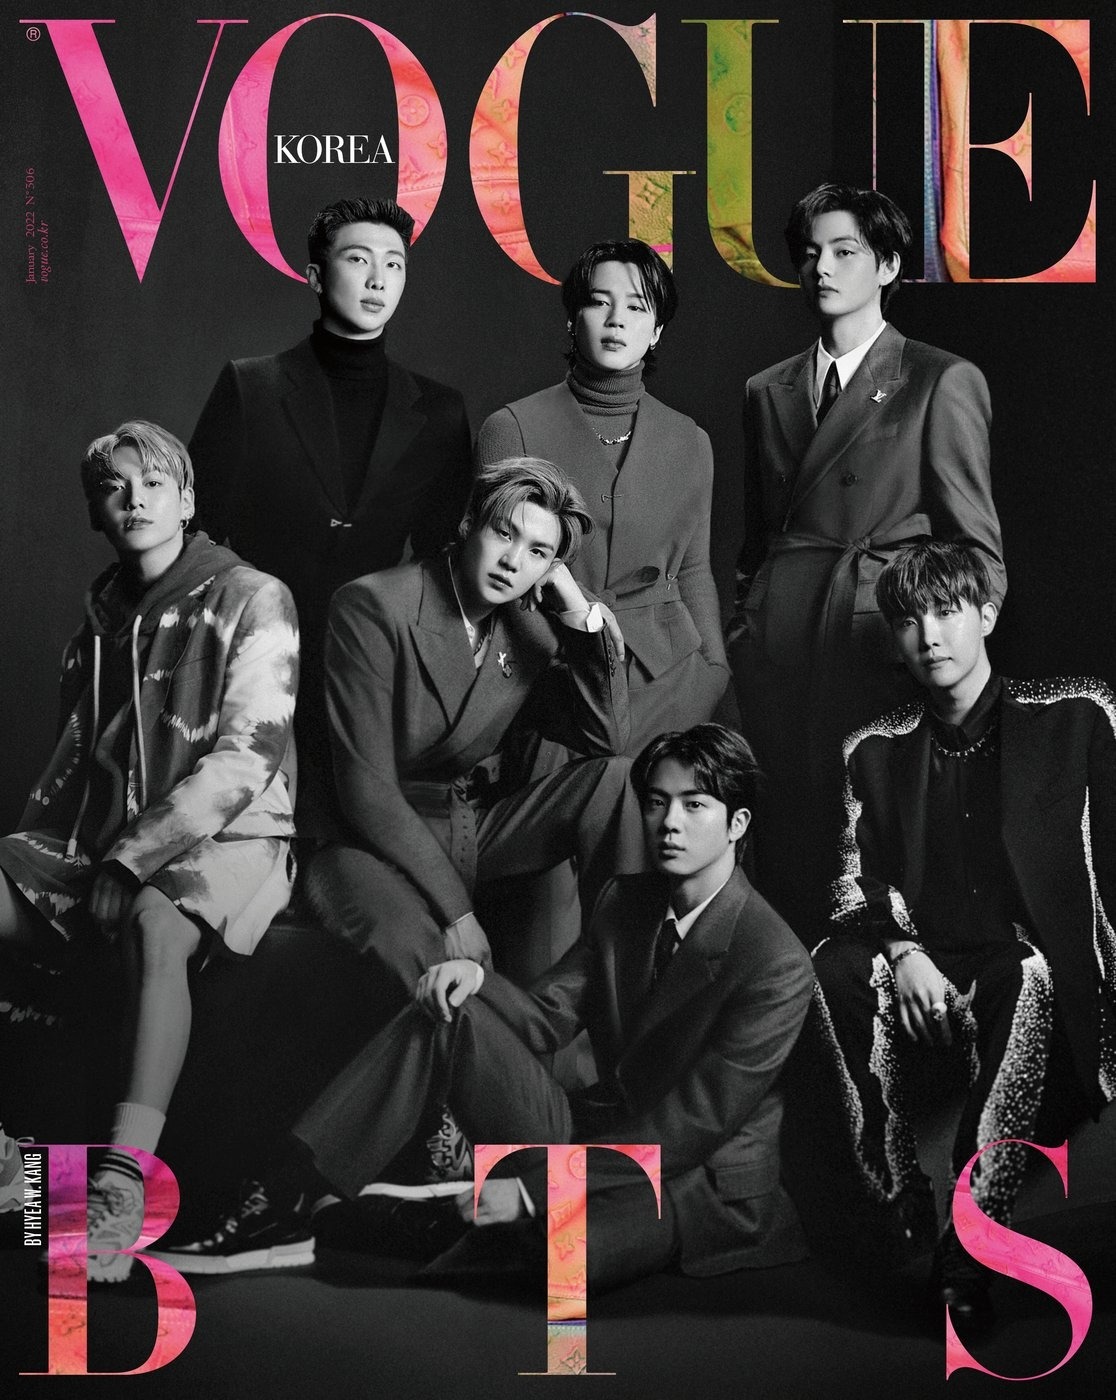 StyleKorea — BTS Jin for Vogue Korea January 2022. Photographed